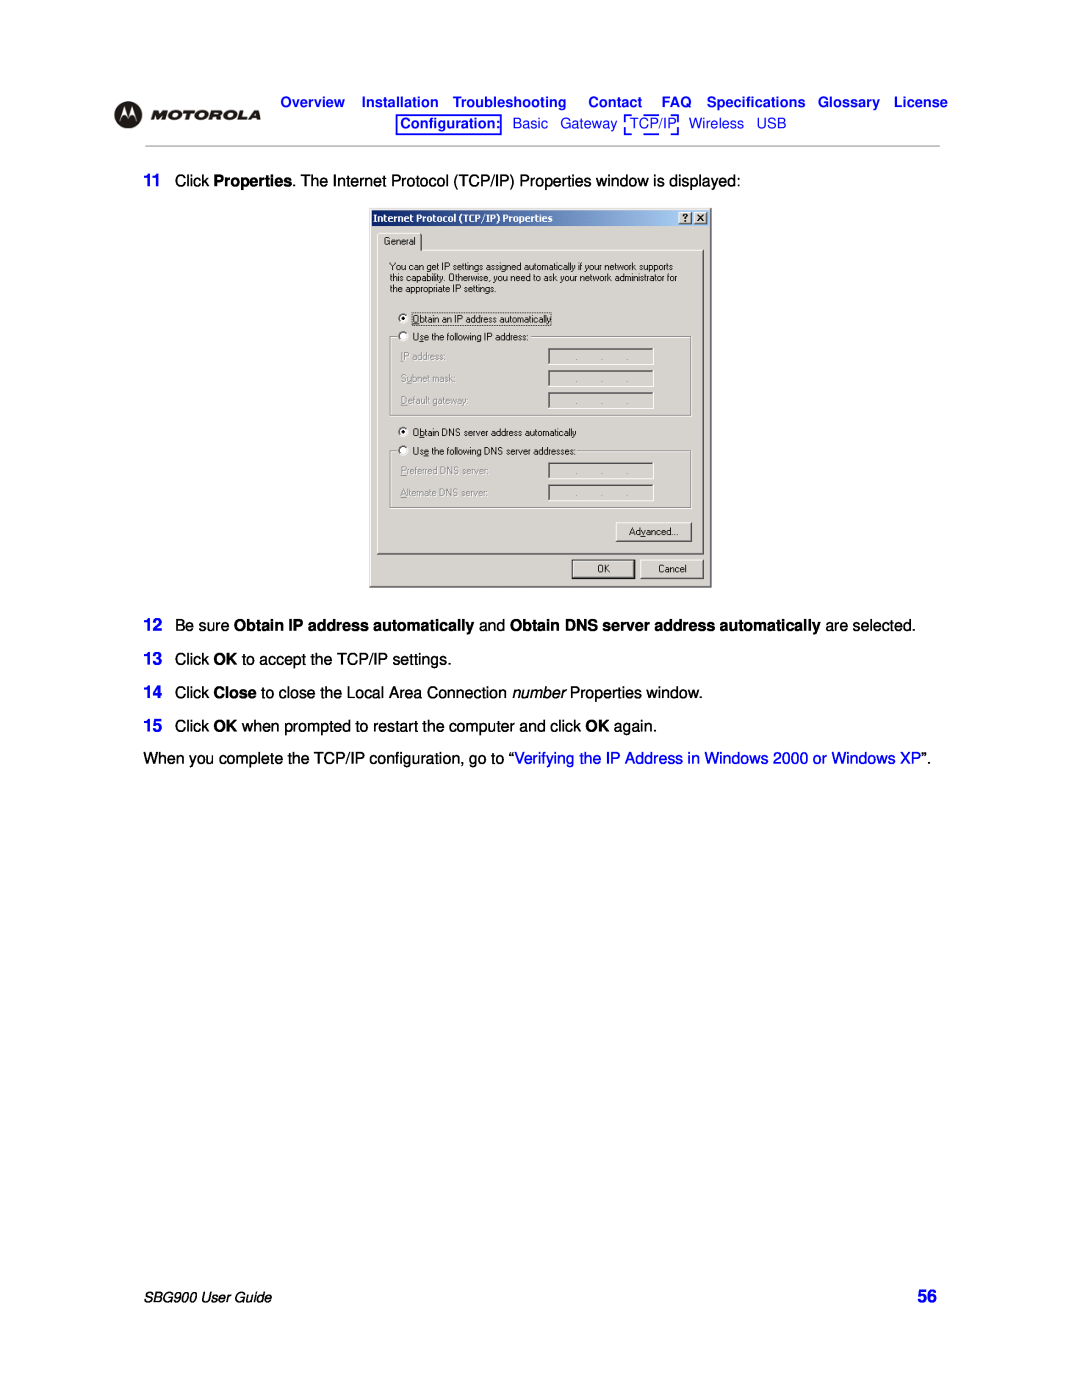 Motorola SBG900 manual Click OK to accept the TCP/IP settings 